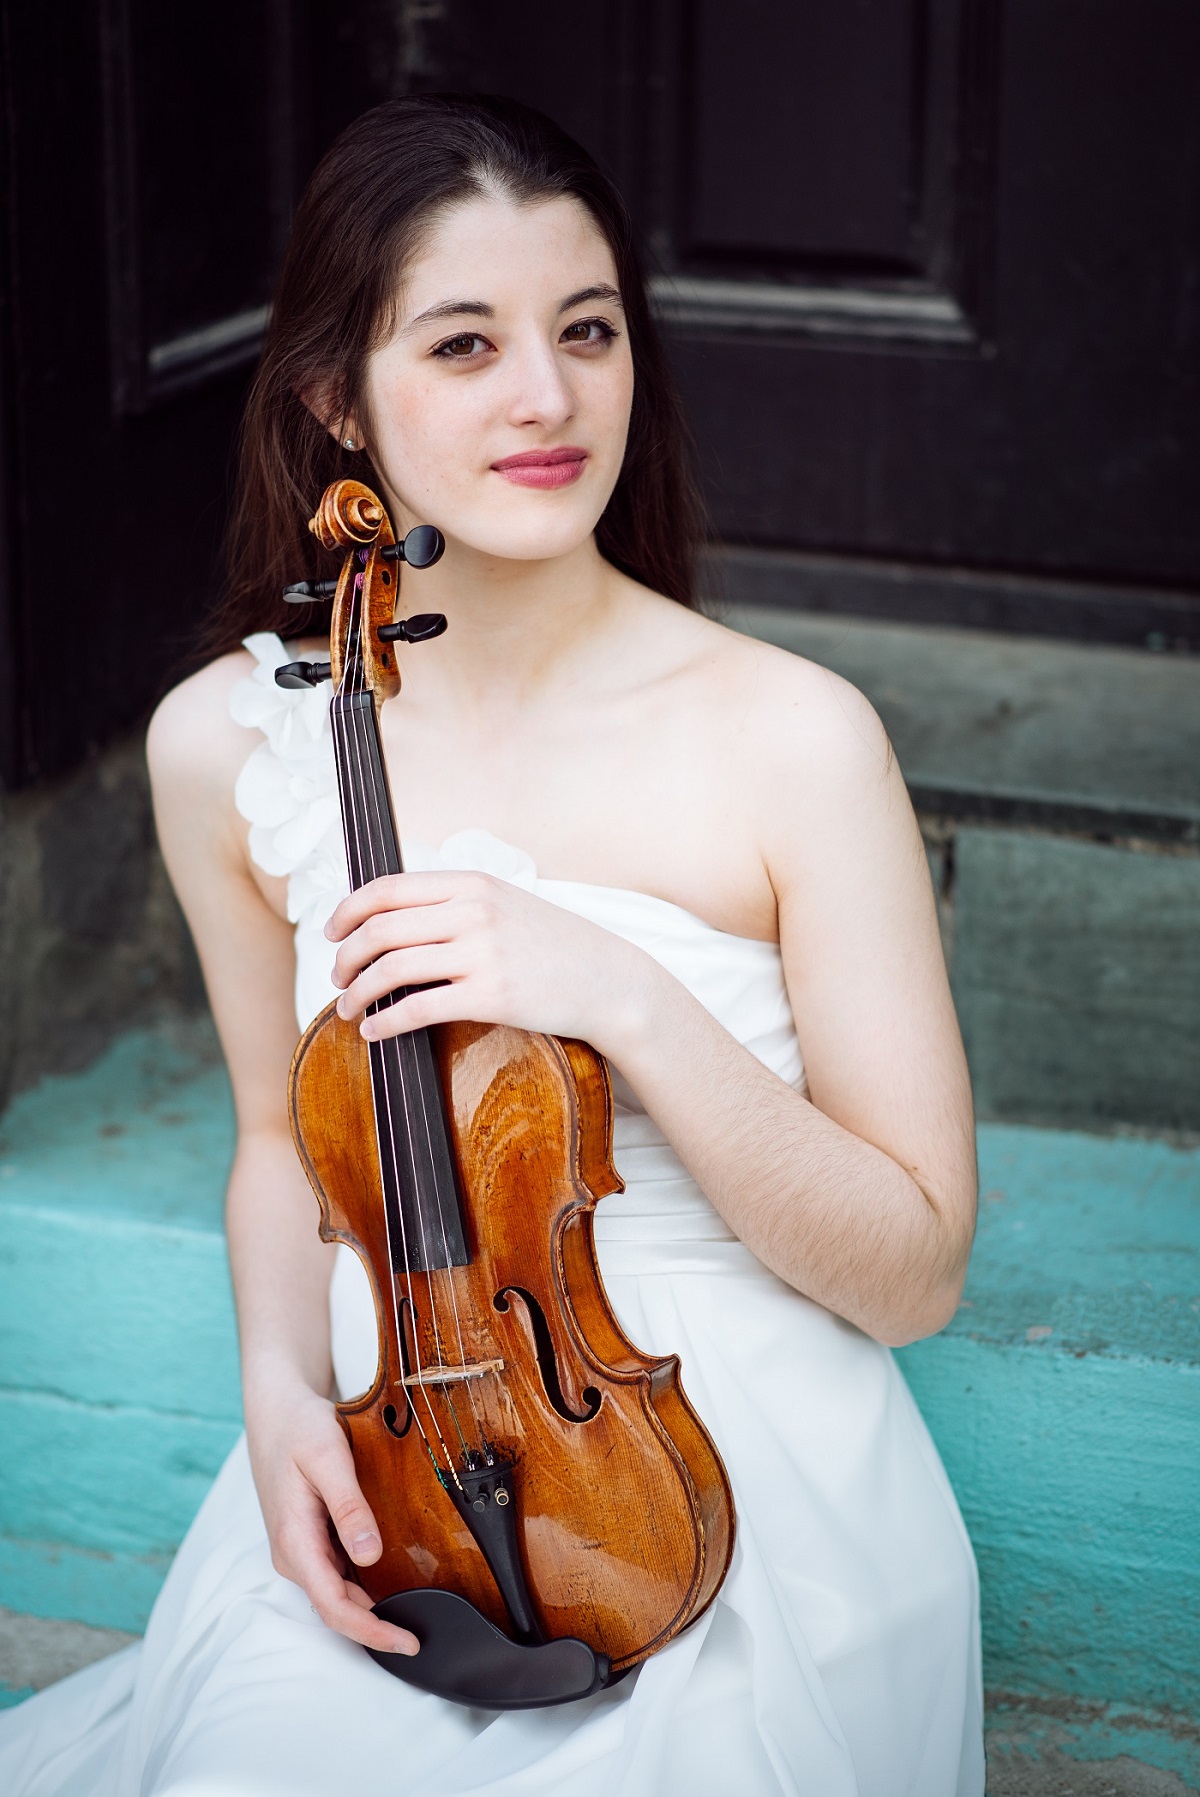 María Dueñas Fernández professional violinist classical music